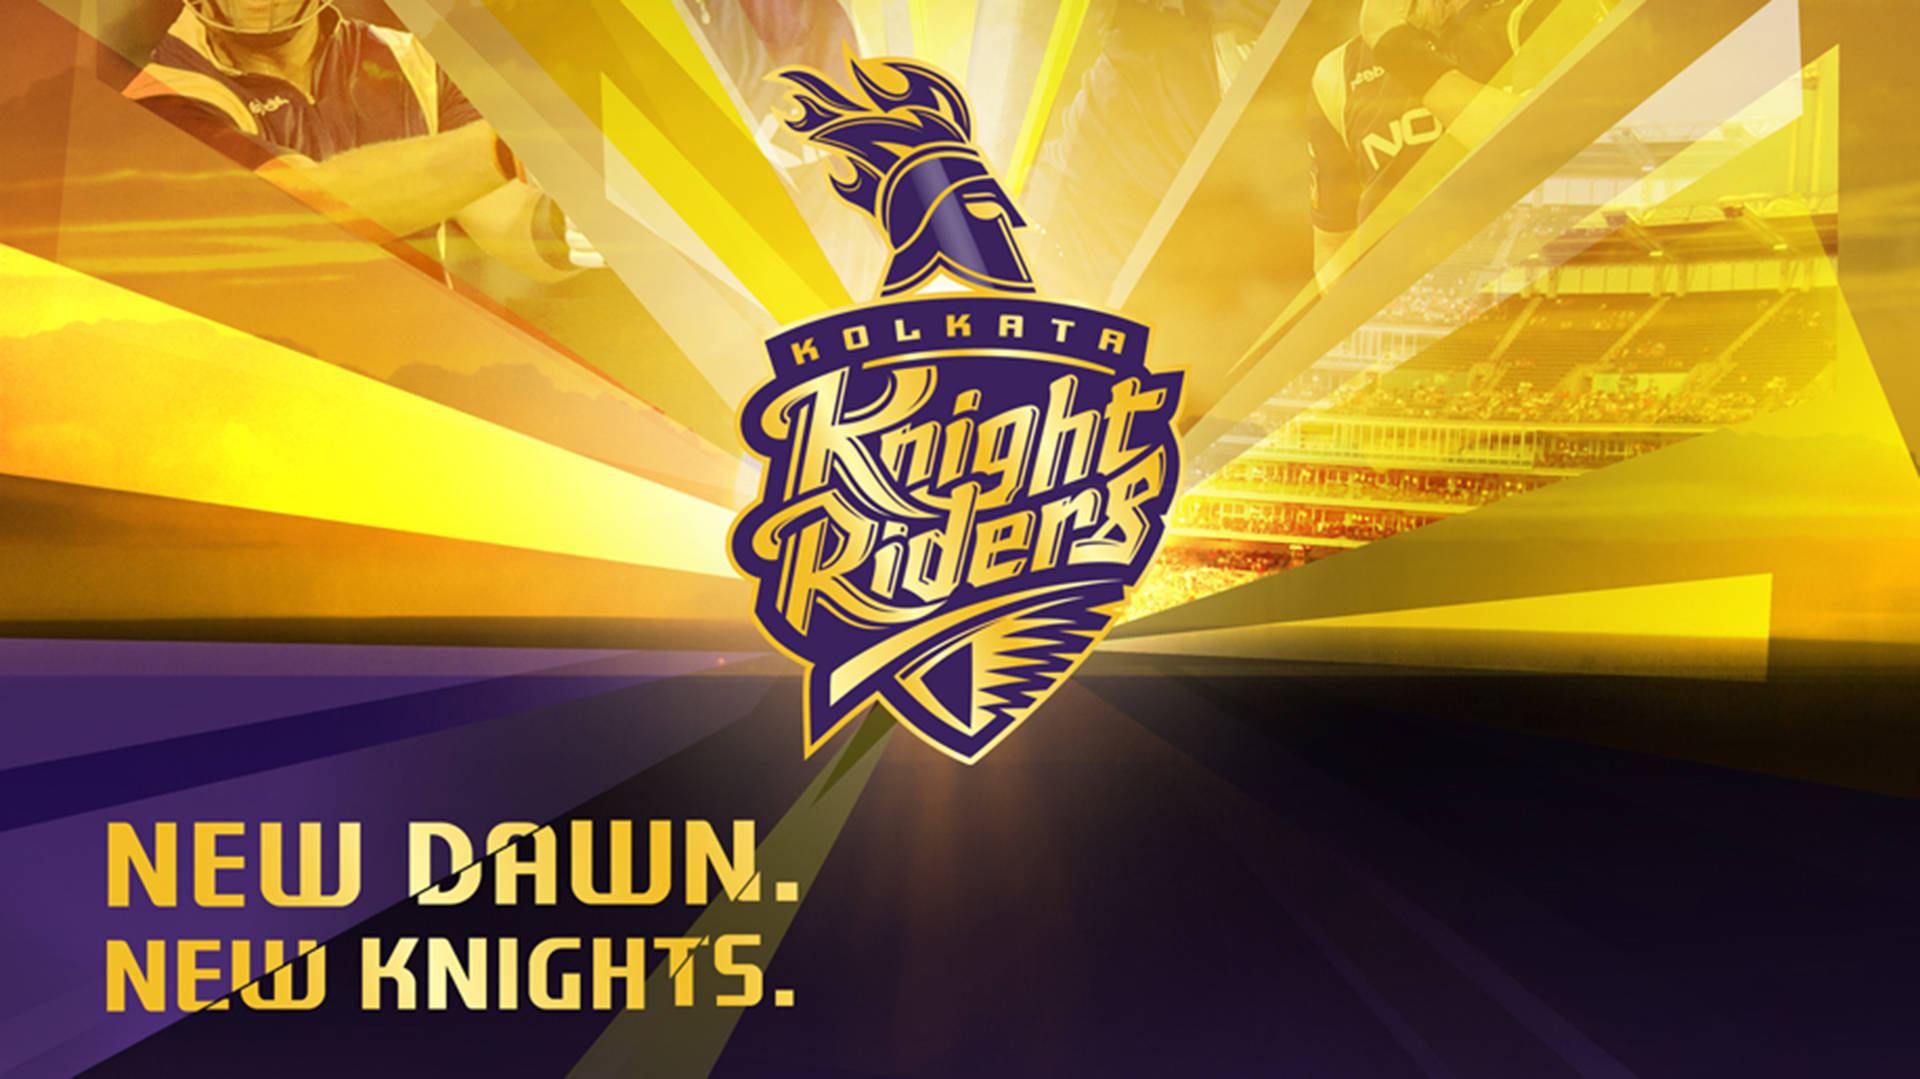 Kolkata Knight Riders Abstract Rays Background